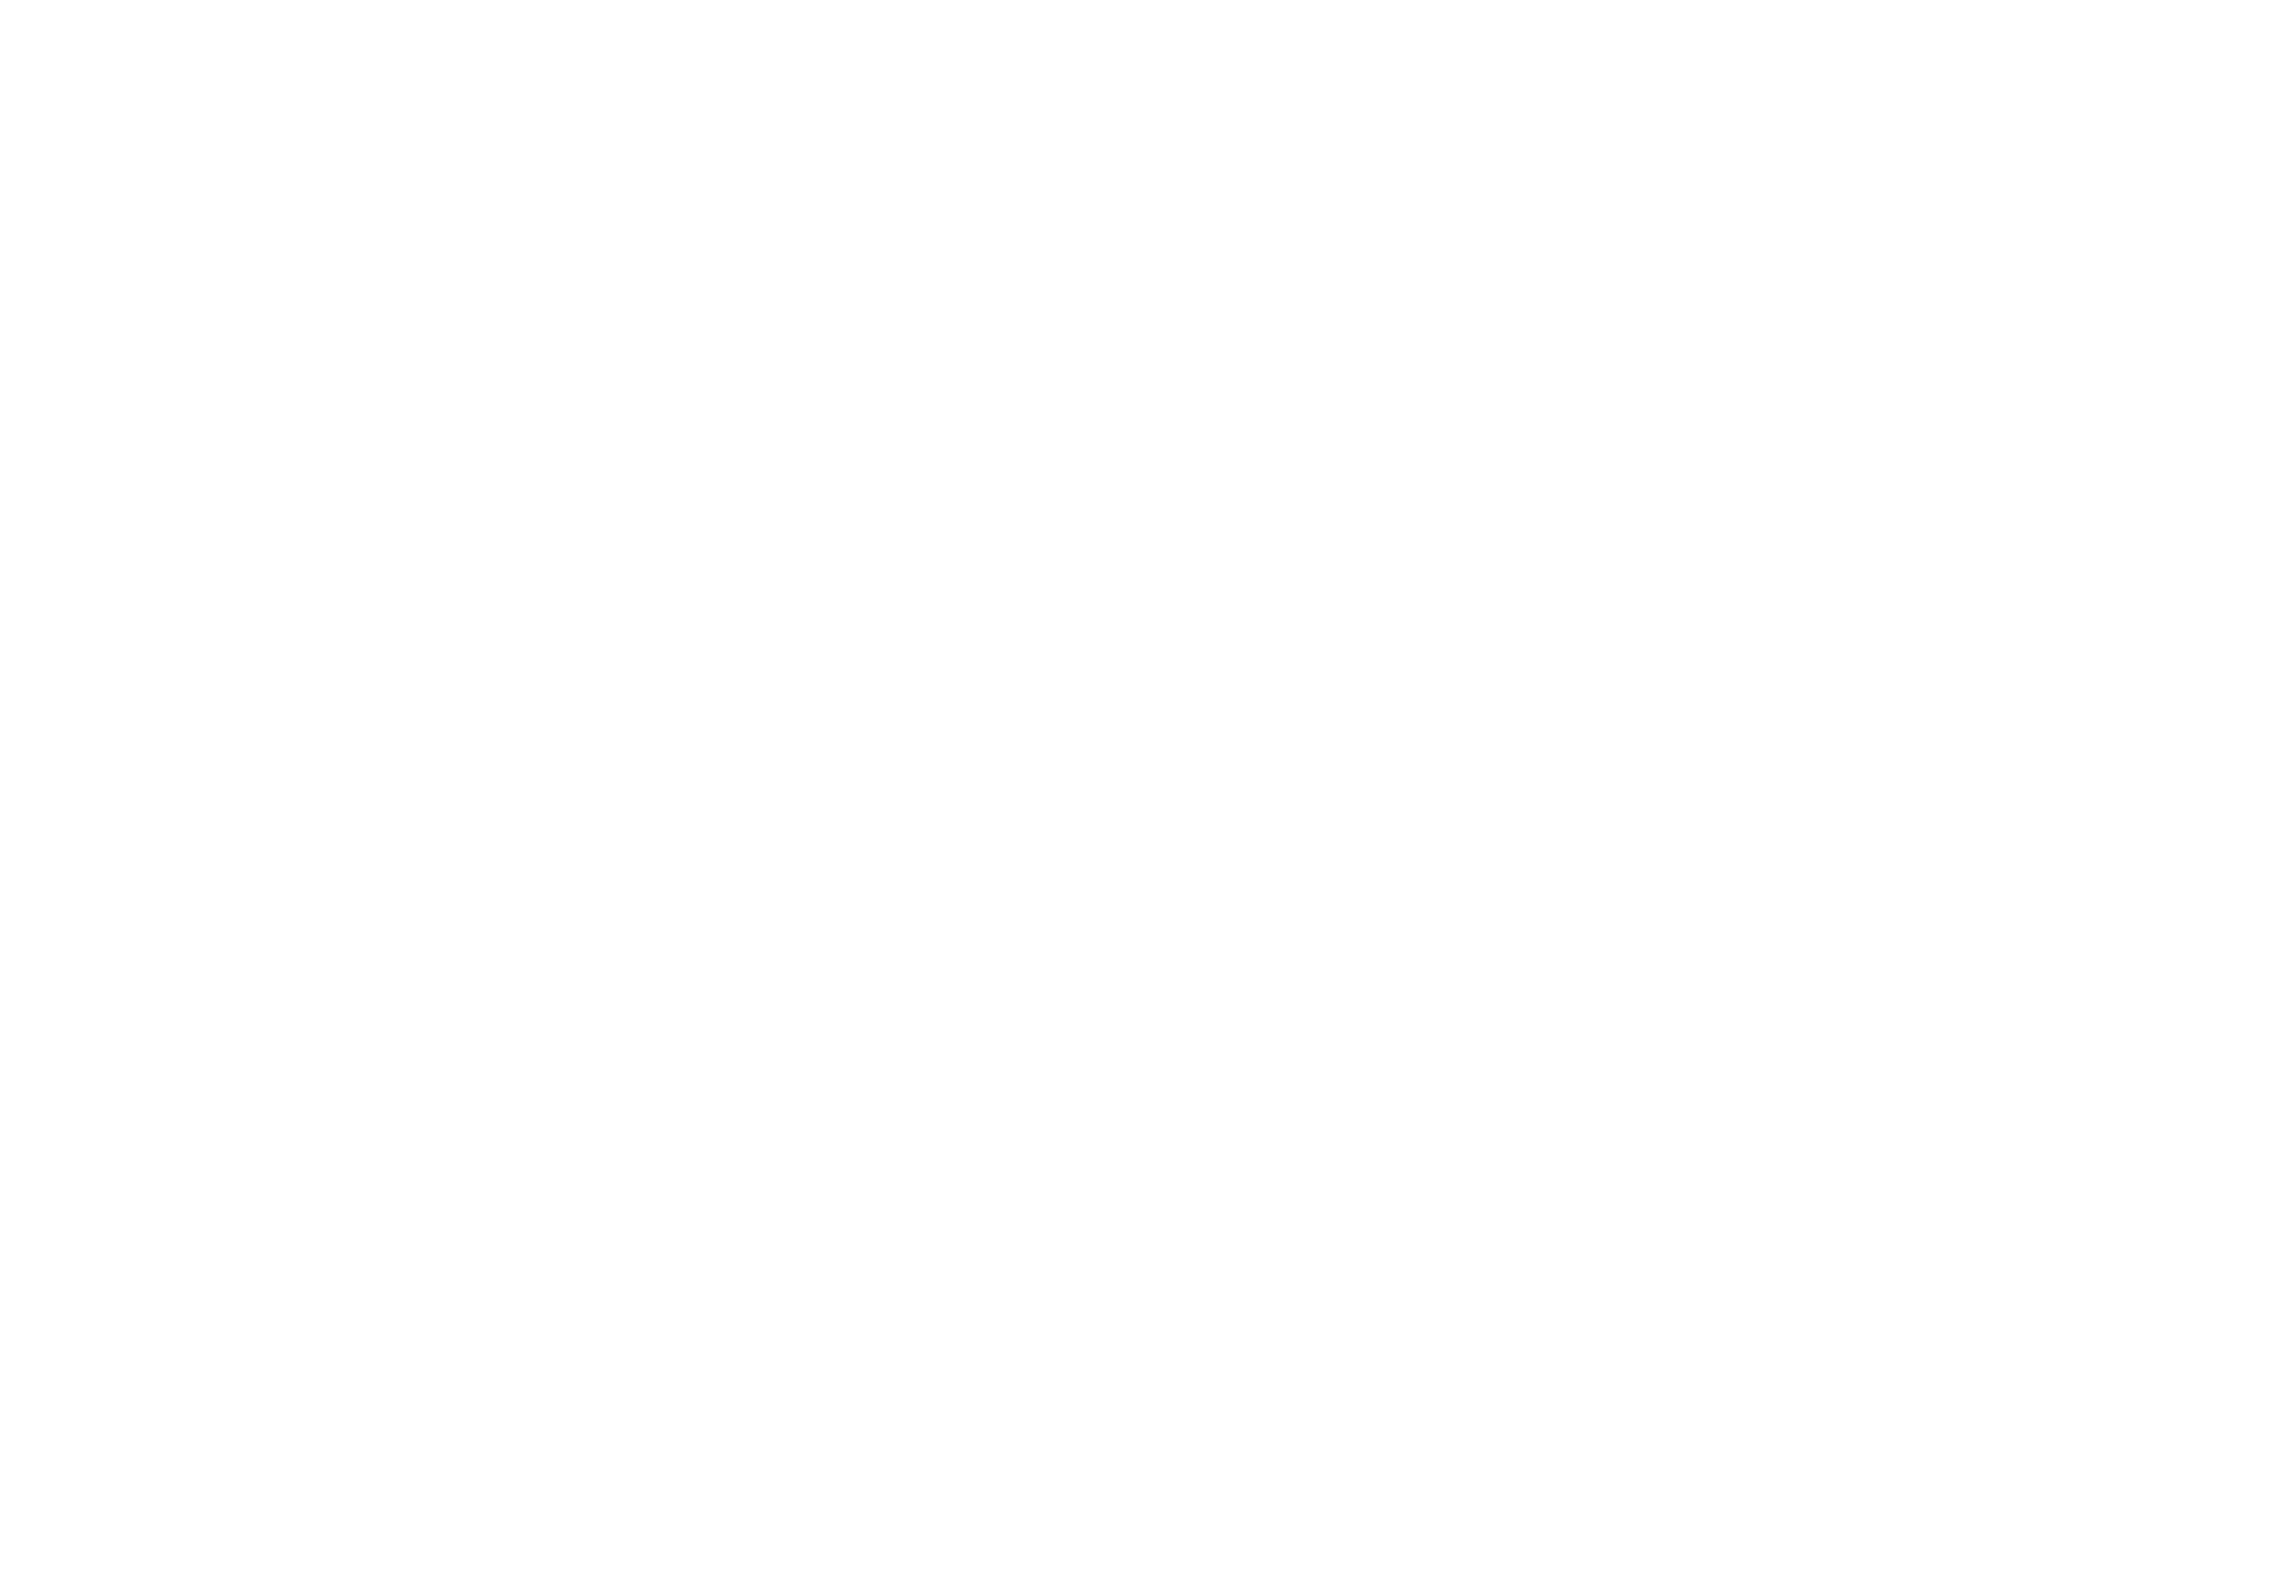 Toyota_logo-white.png